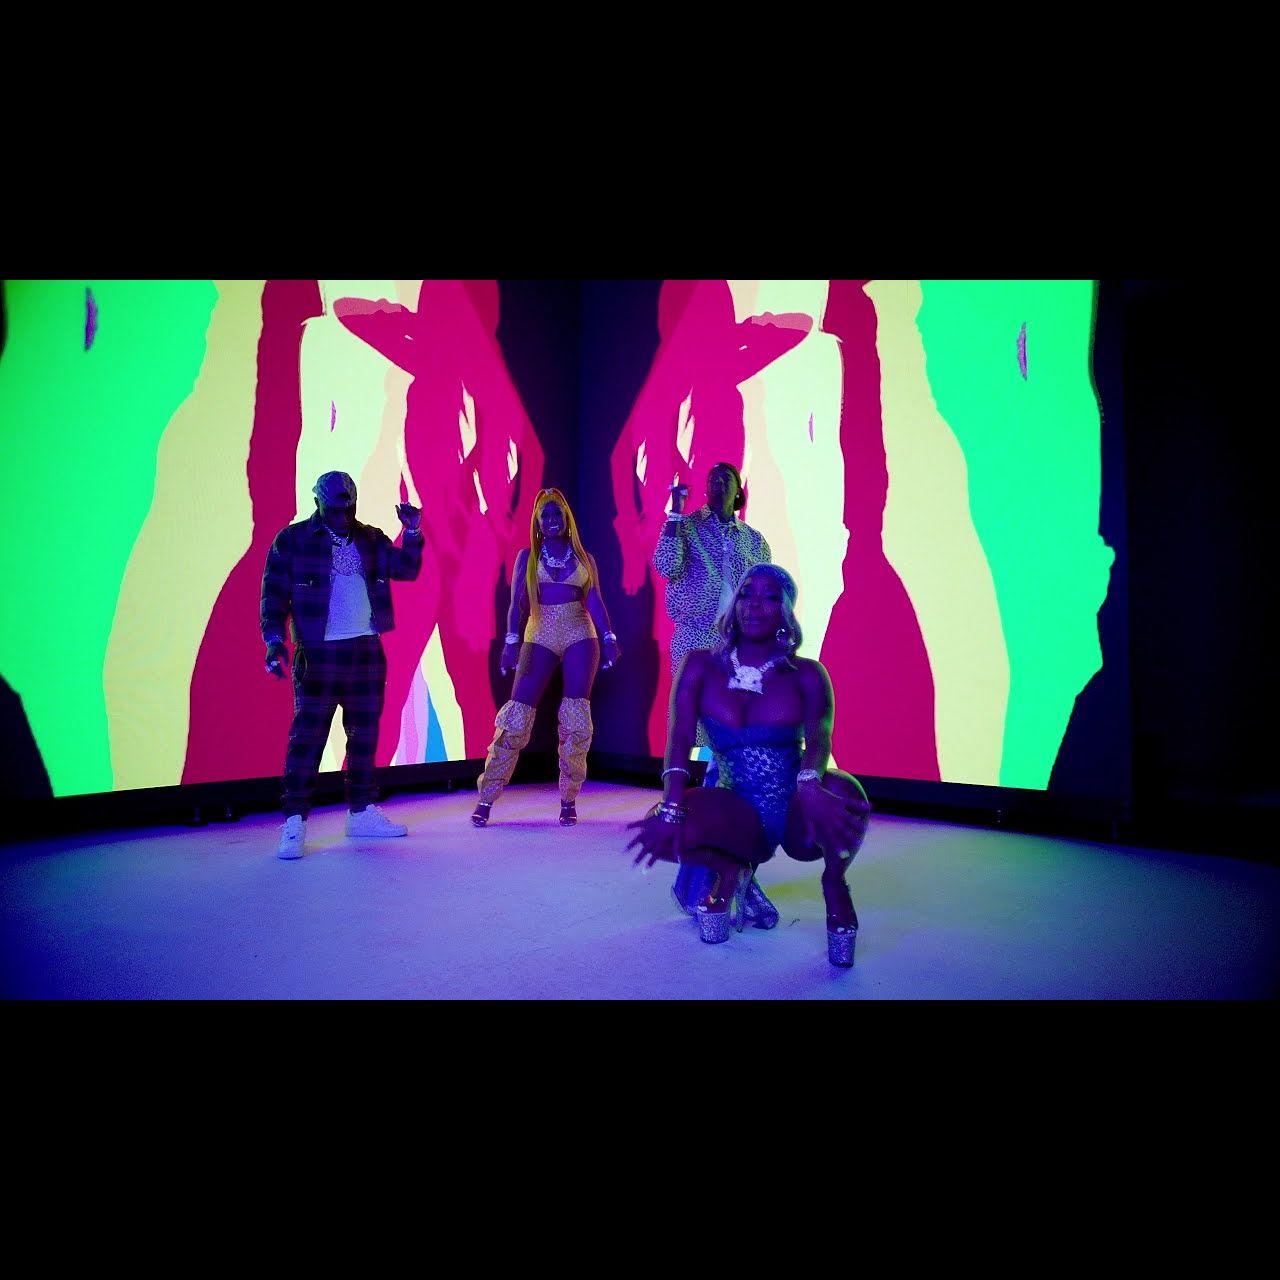 Moneybagg Yo - Said Sum (Remix) (ft. City Girls and DaBaby) (Thumbnail)